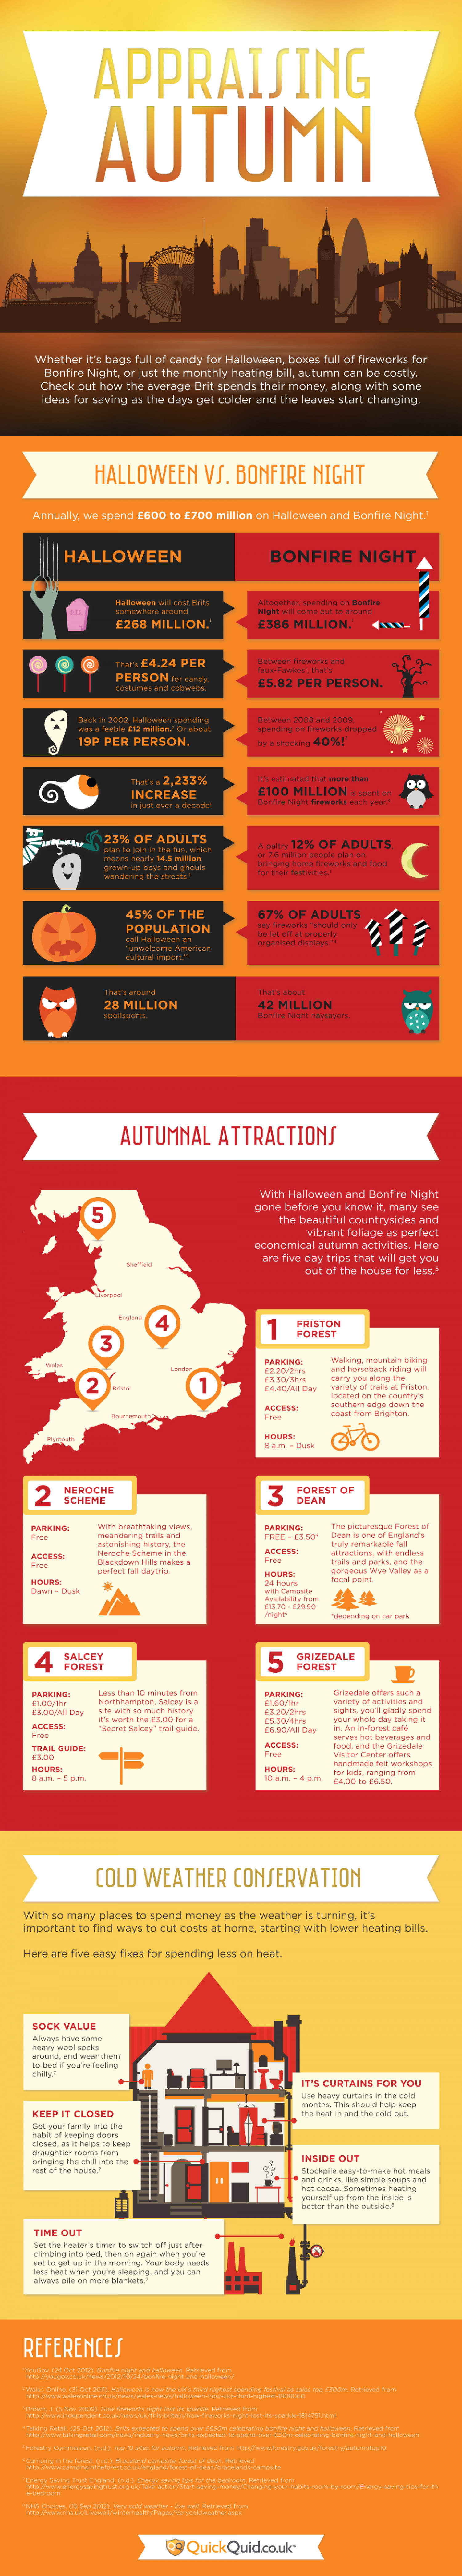 Appraising Autumn Infographic